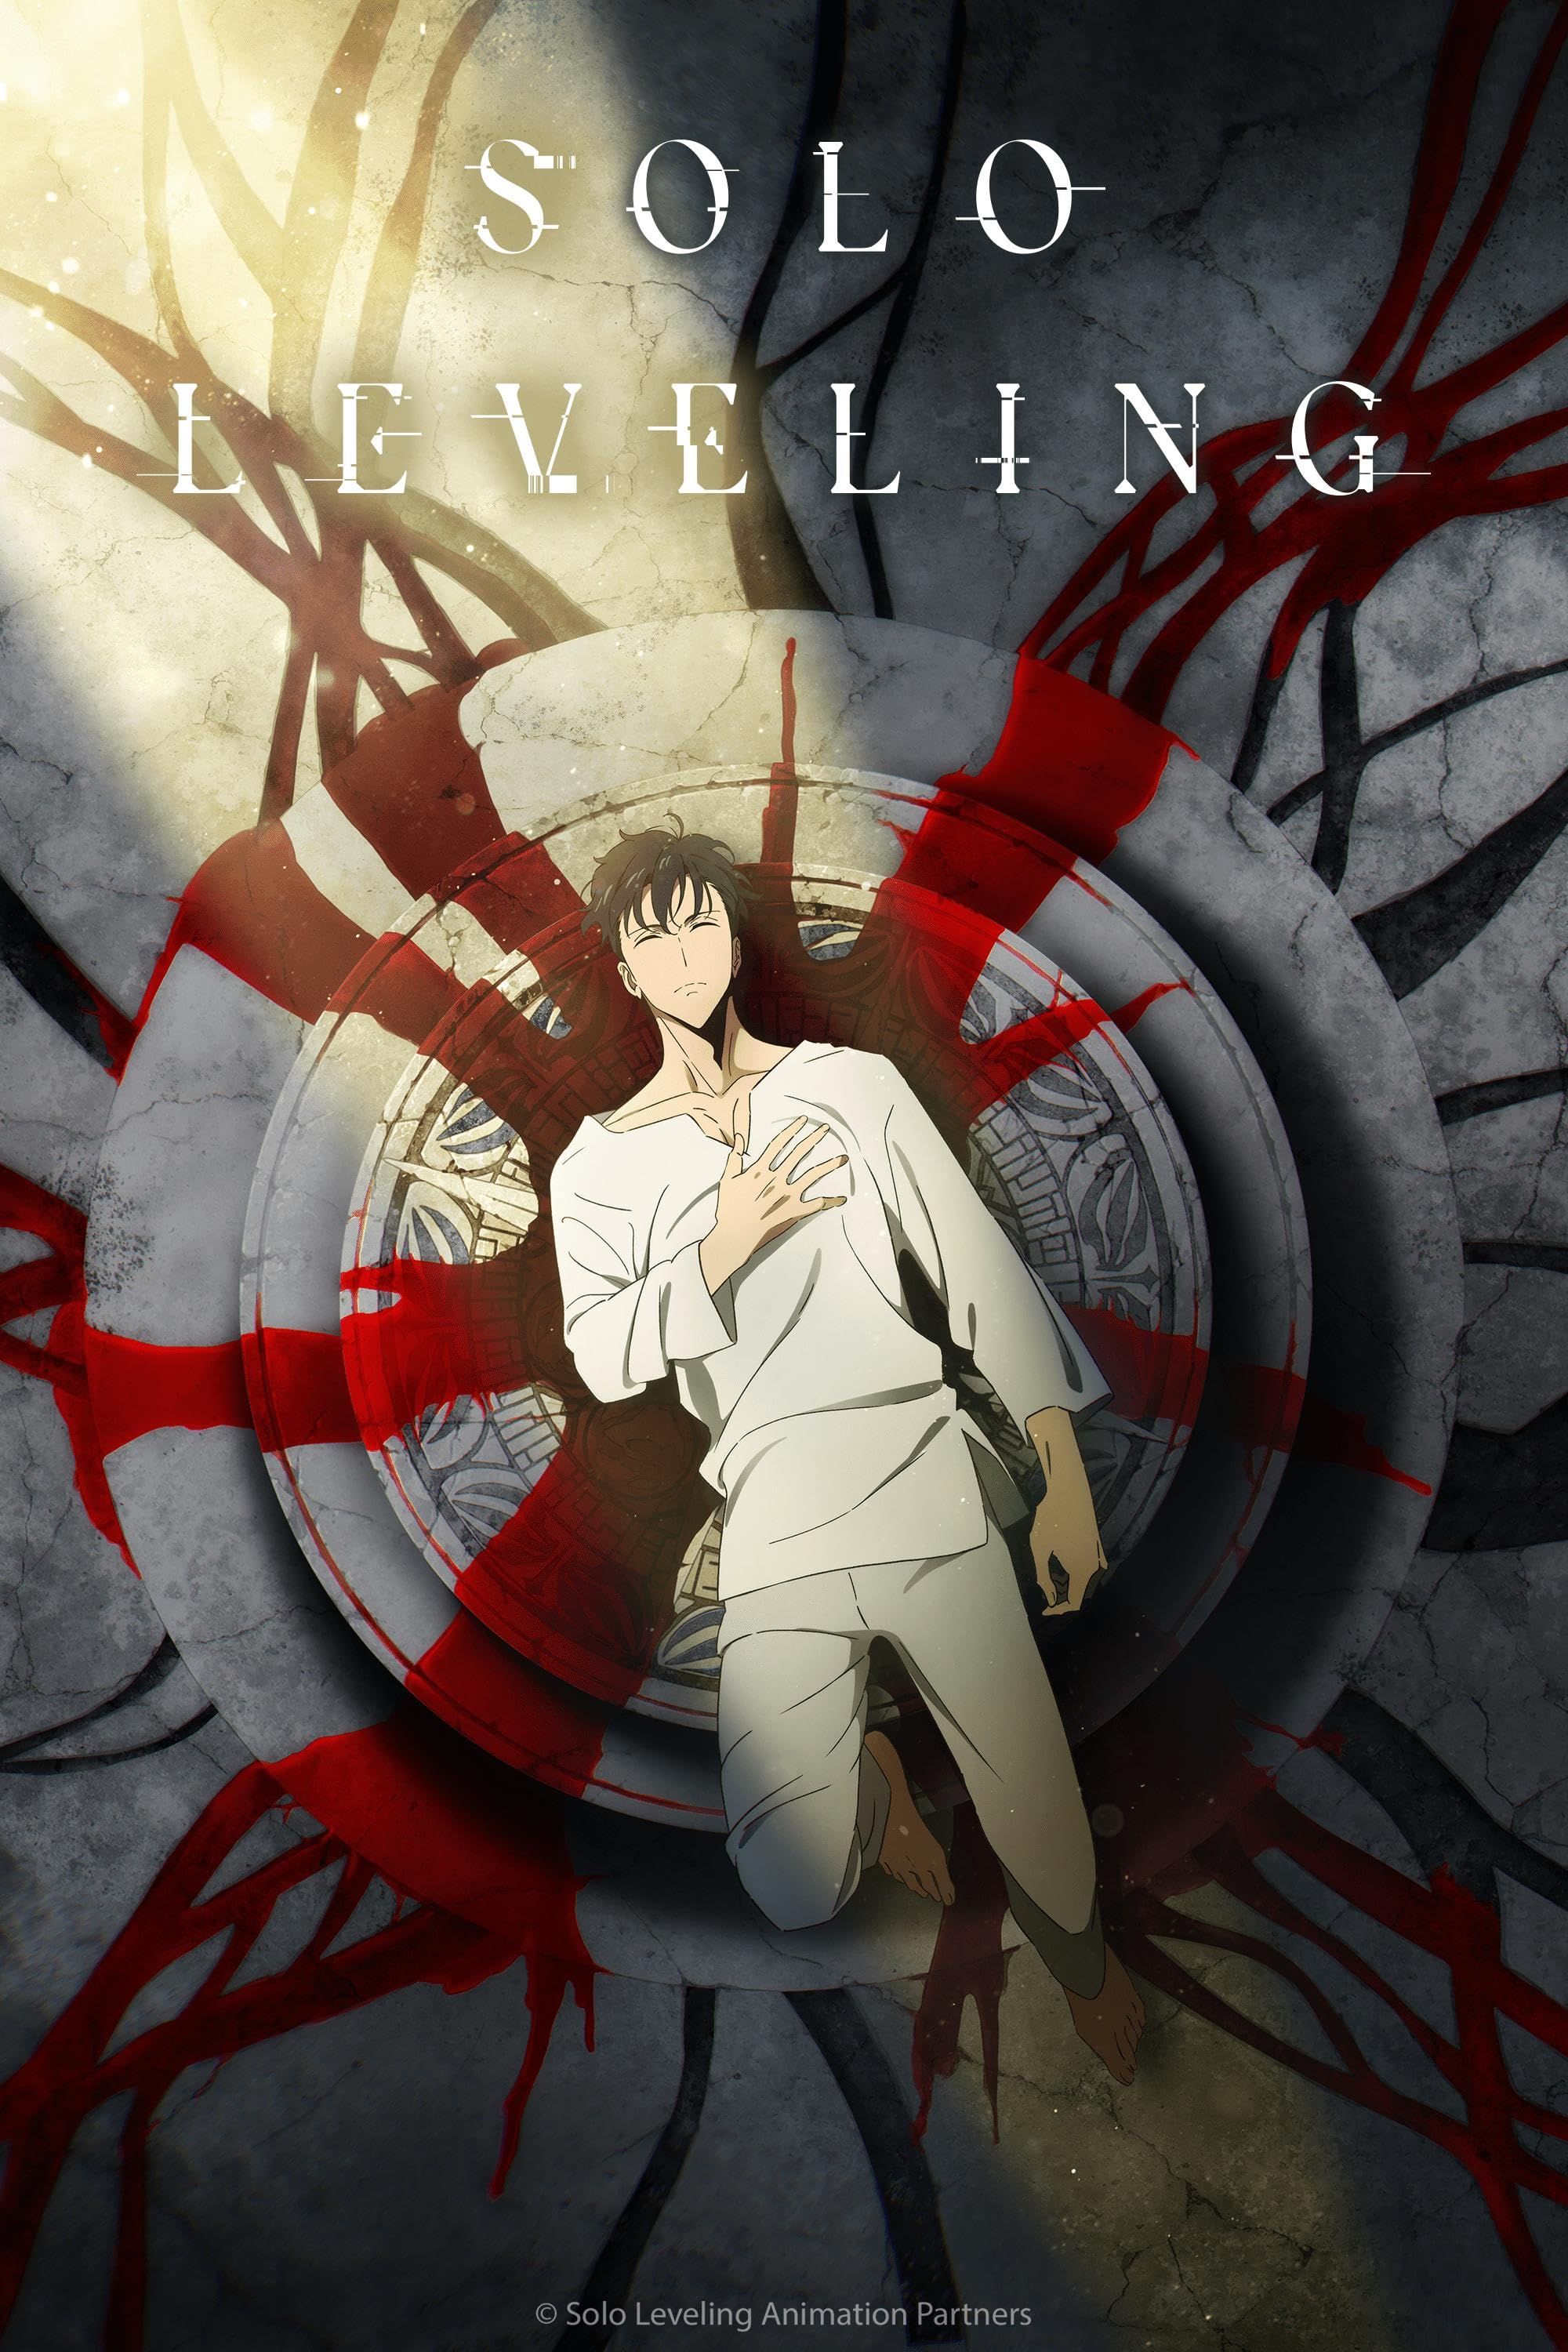 Solo Leveling (Season 1) (E01 ADDED) Hindi Dubbed Anime Series HDRip 720p 480p